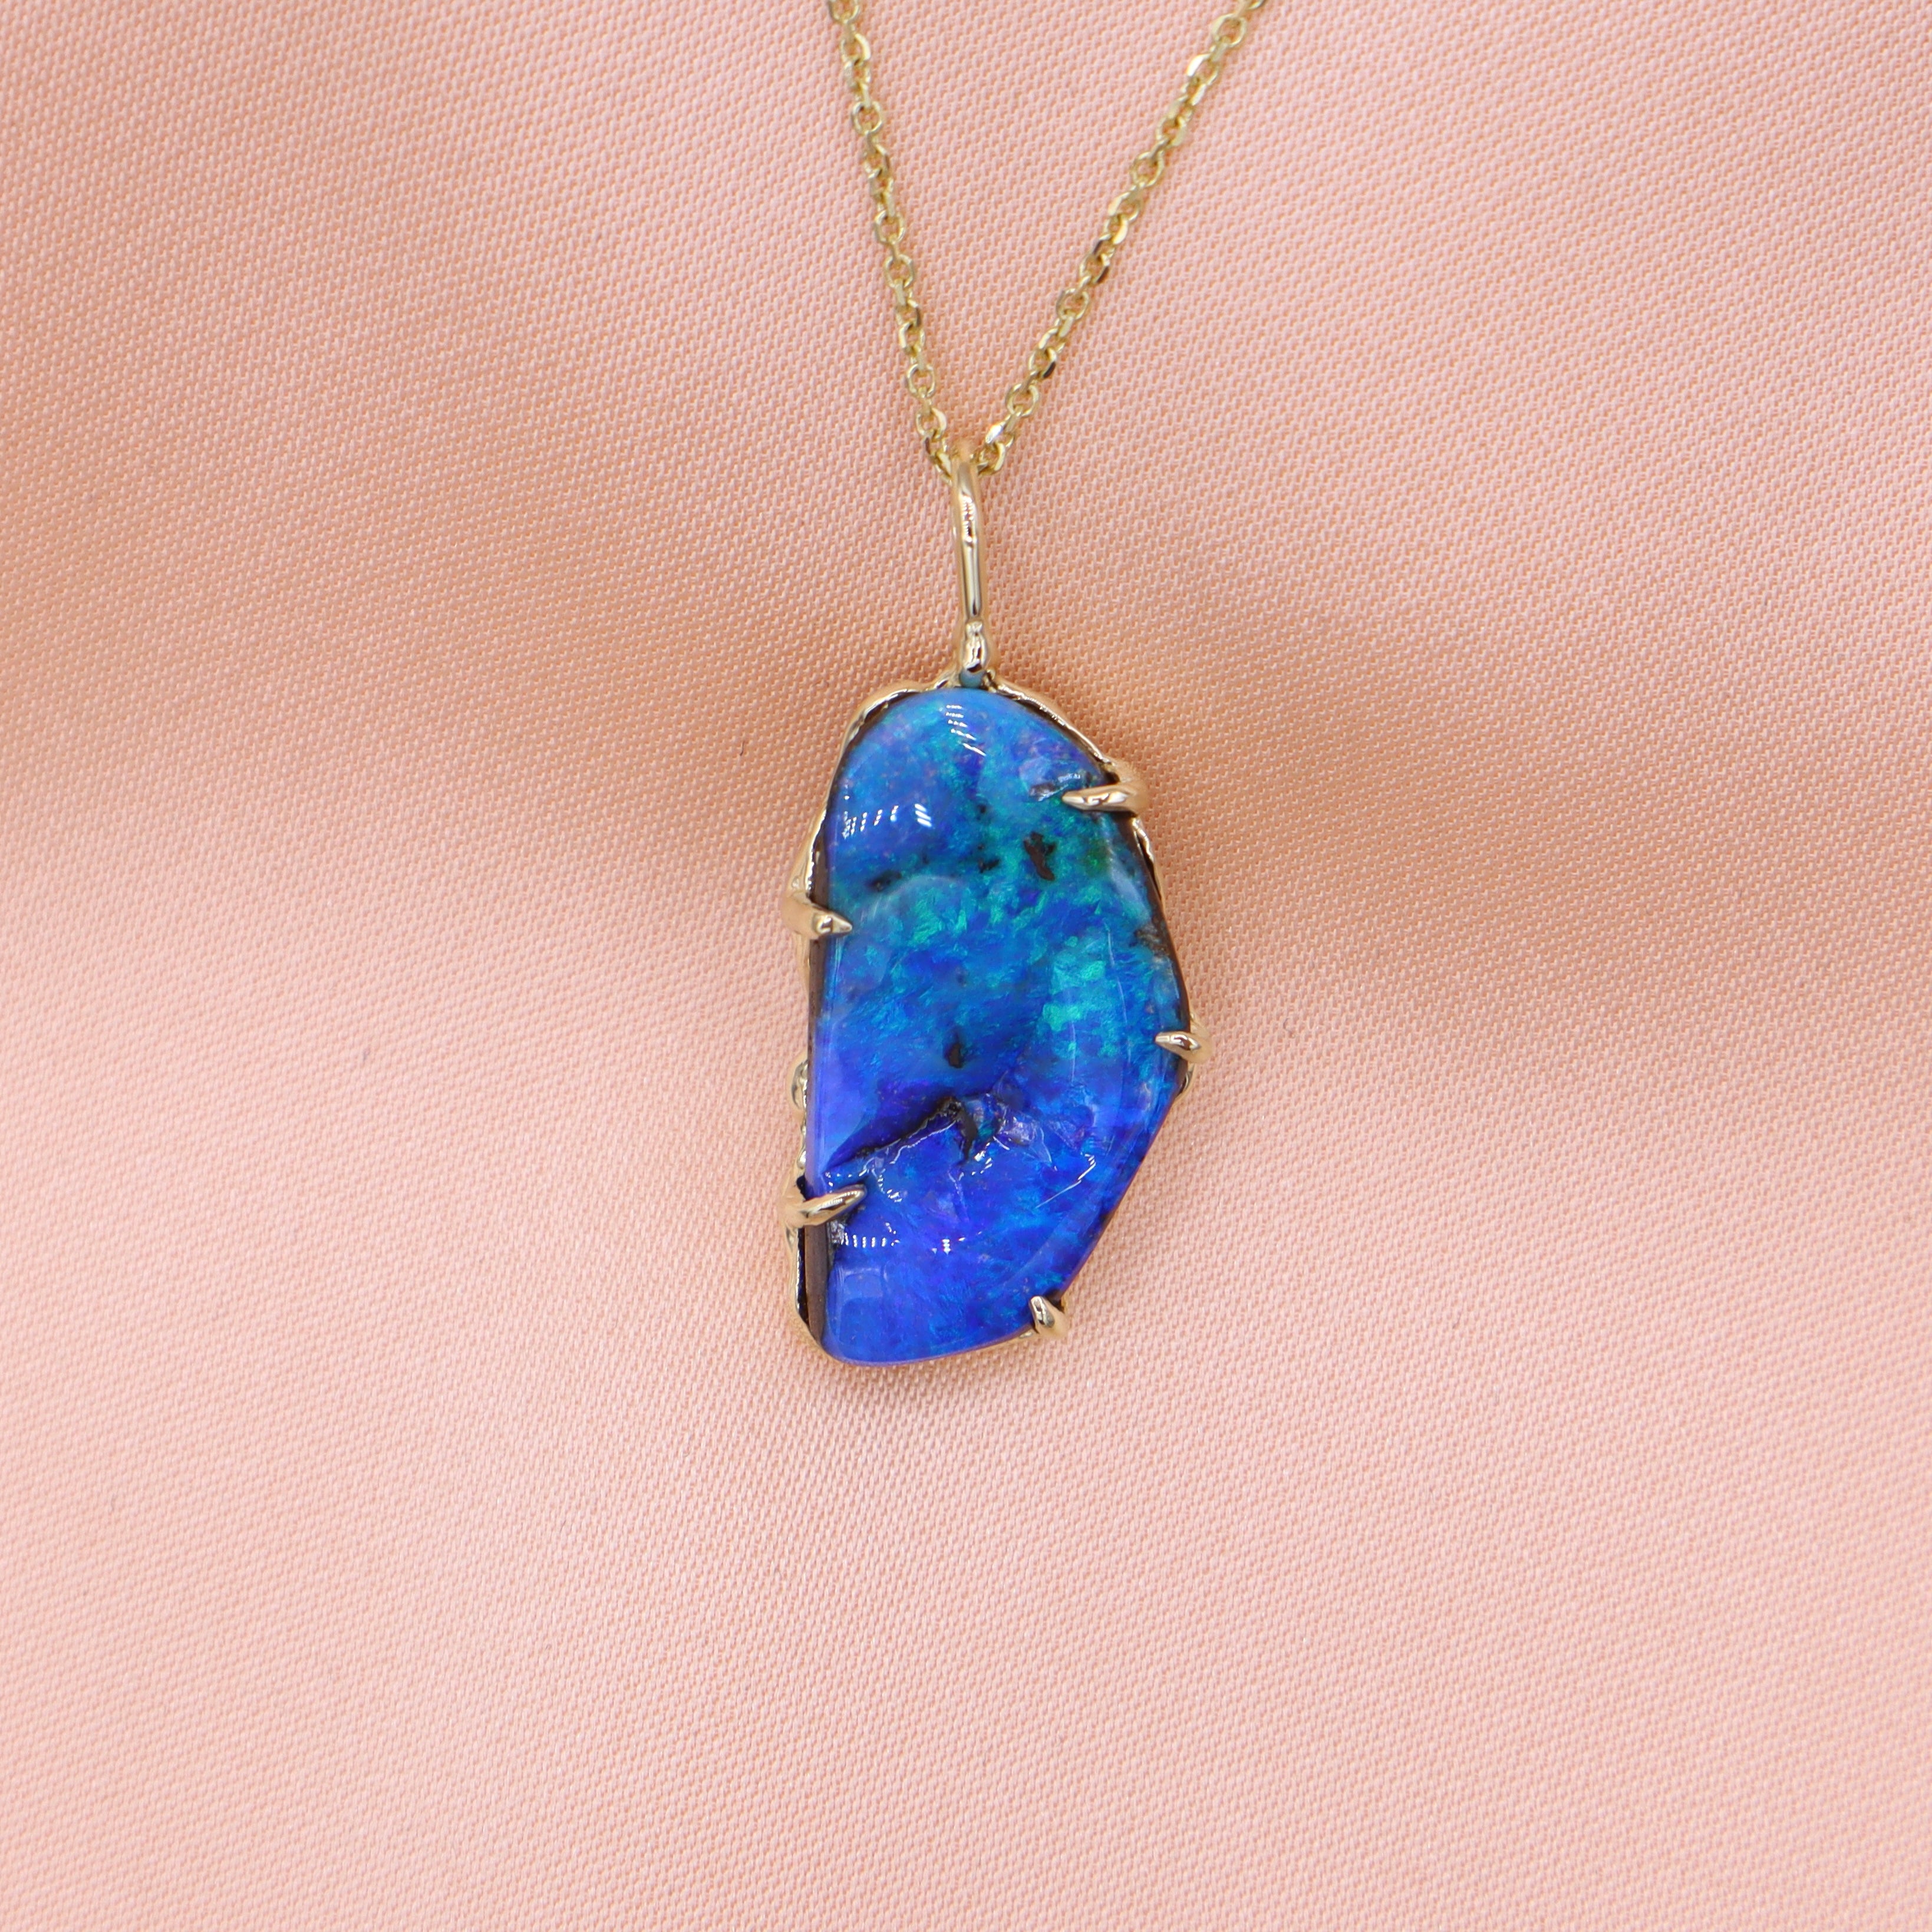 Royal Blue Fire Opal Necklace with Swarovski Crystal Premium Australian  Made Gift by Oz Art Studios